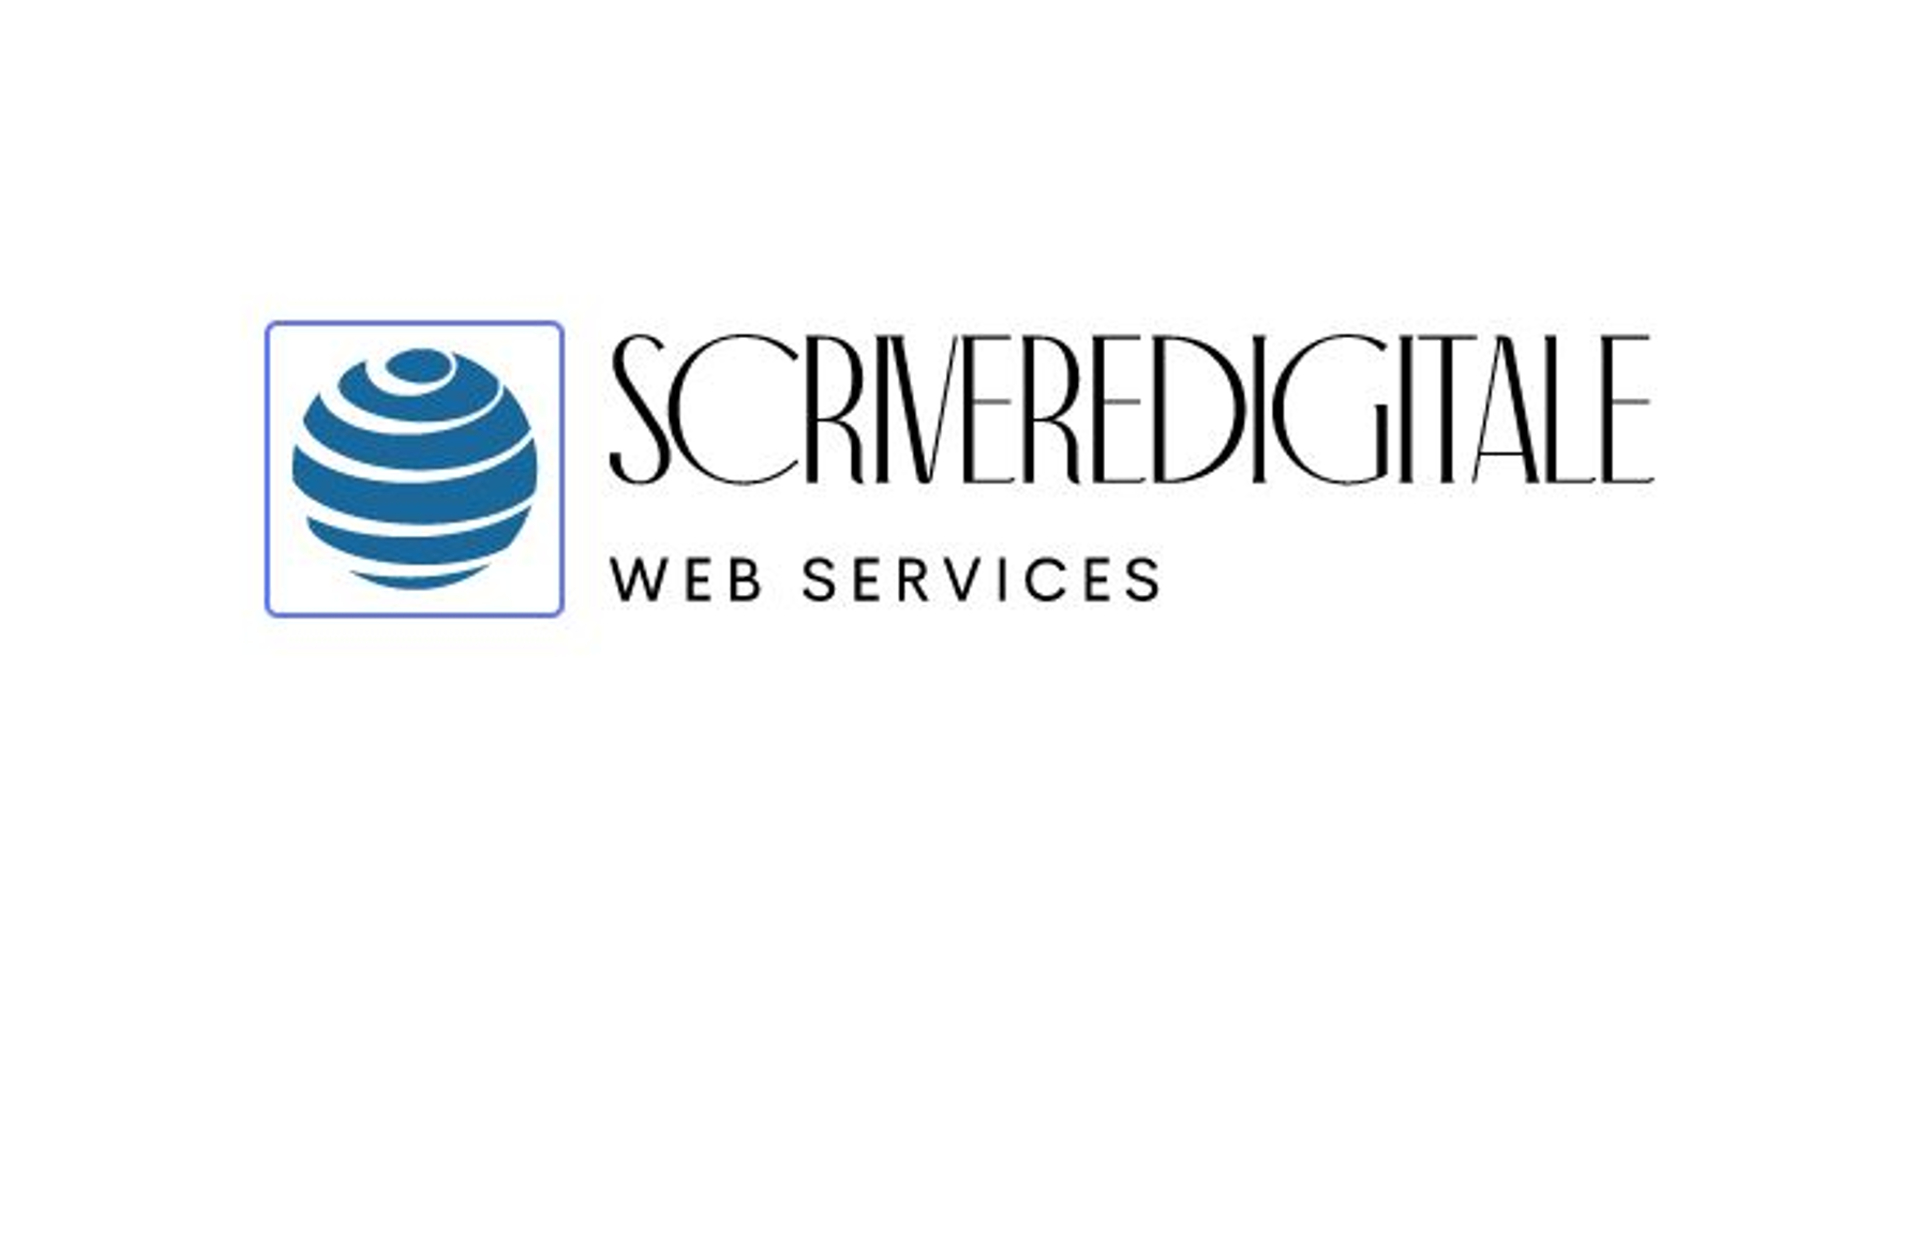 ScrivereDigitale Web Services